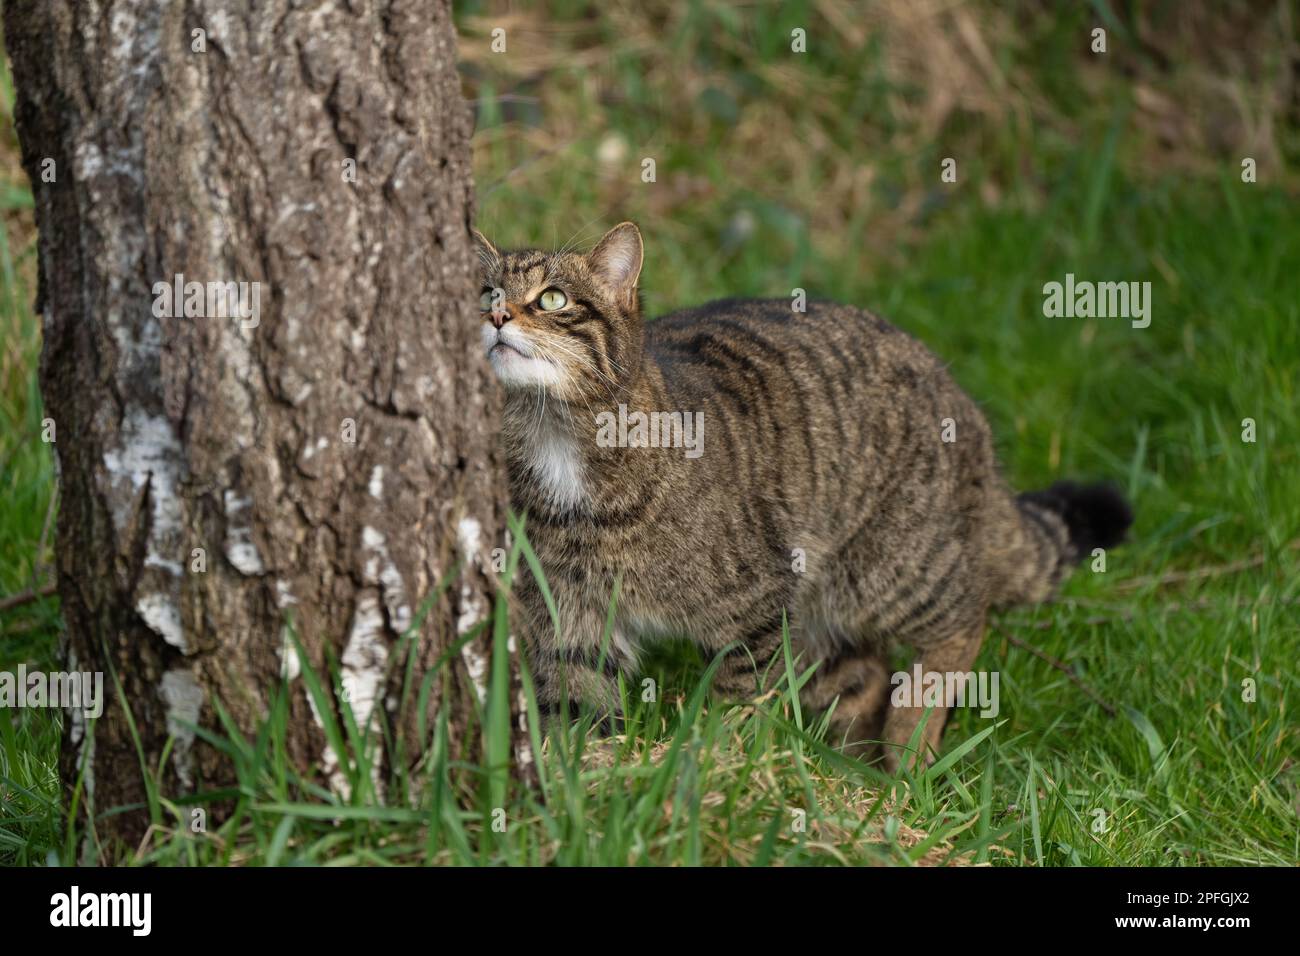 Scottish wildcat-Felis silvestris silvestris. Stock Photo